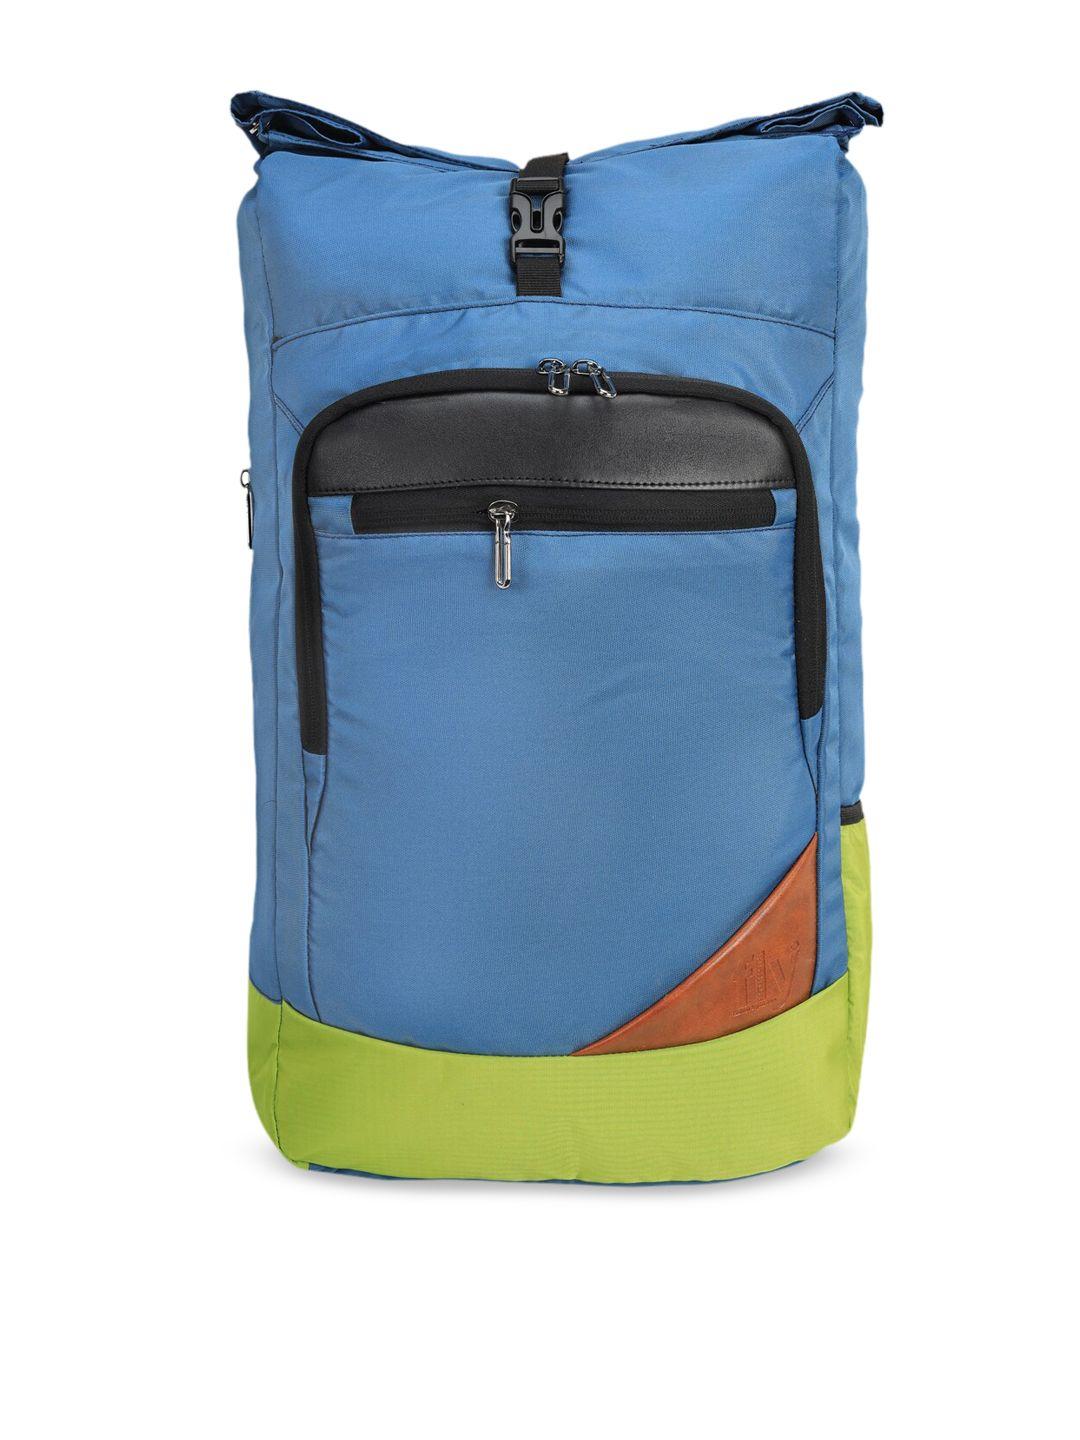 fly fashion unisex blue & green colourblocked backpack